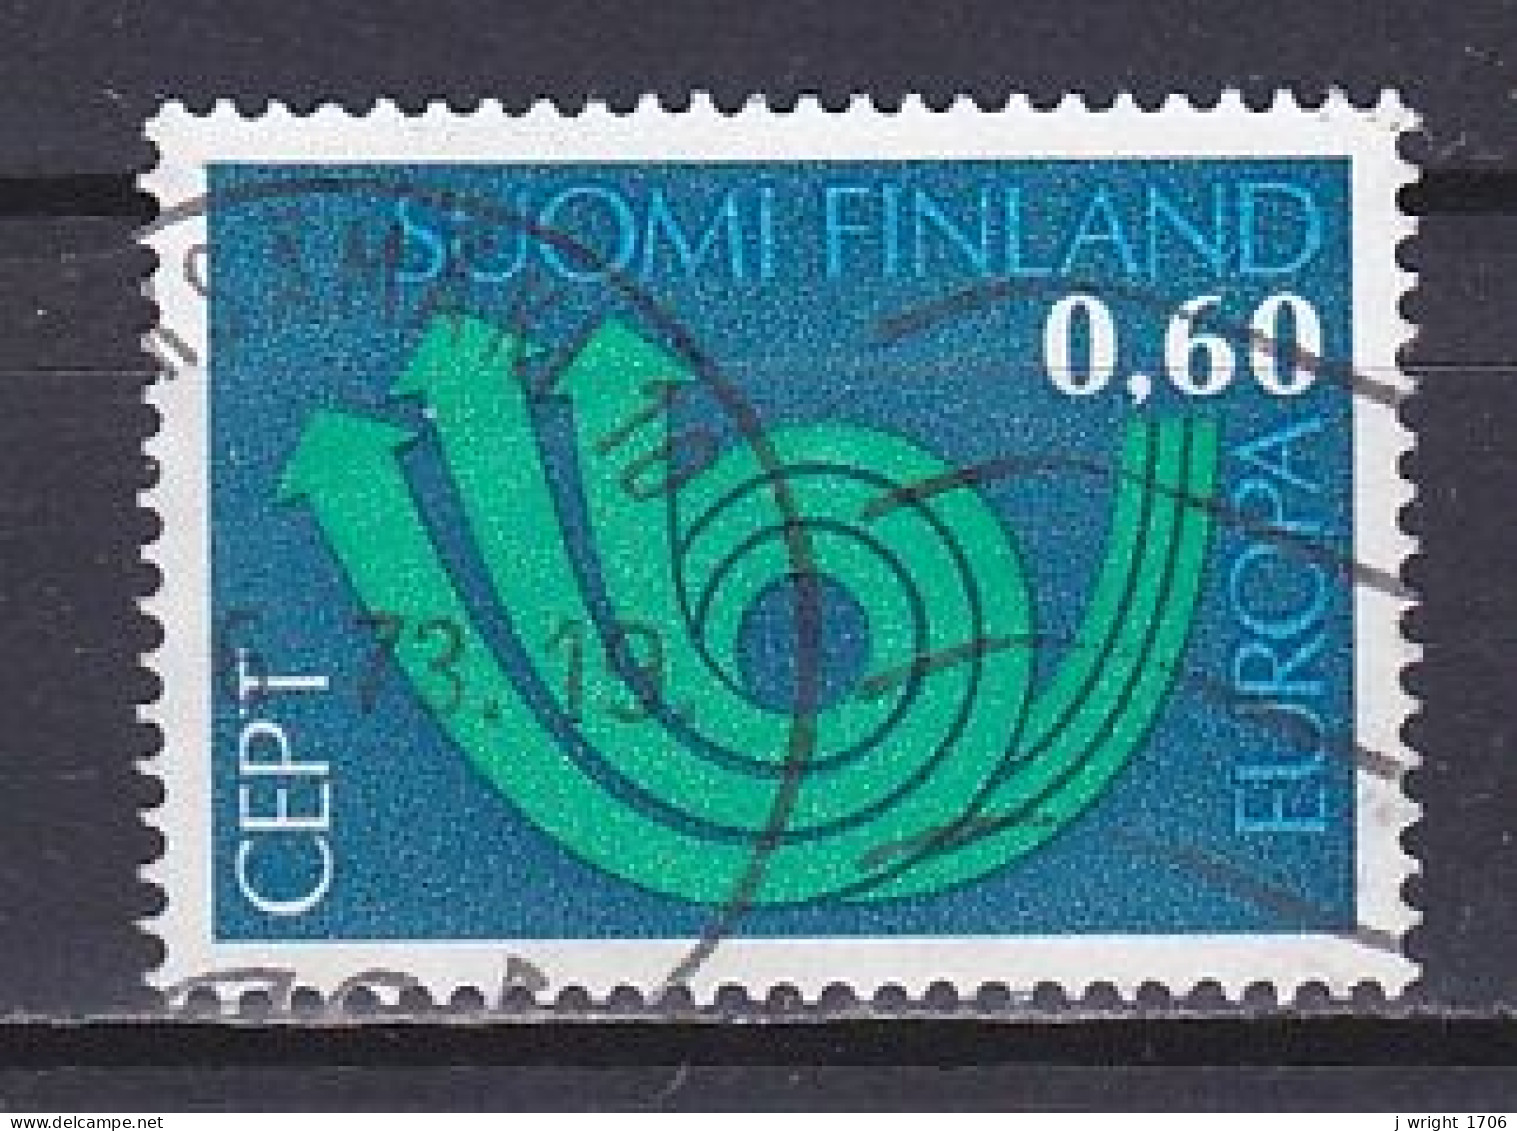 Finland, 1973, Europa CEPT, 0.60mk, USED - Oblitérés